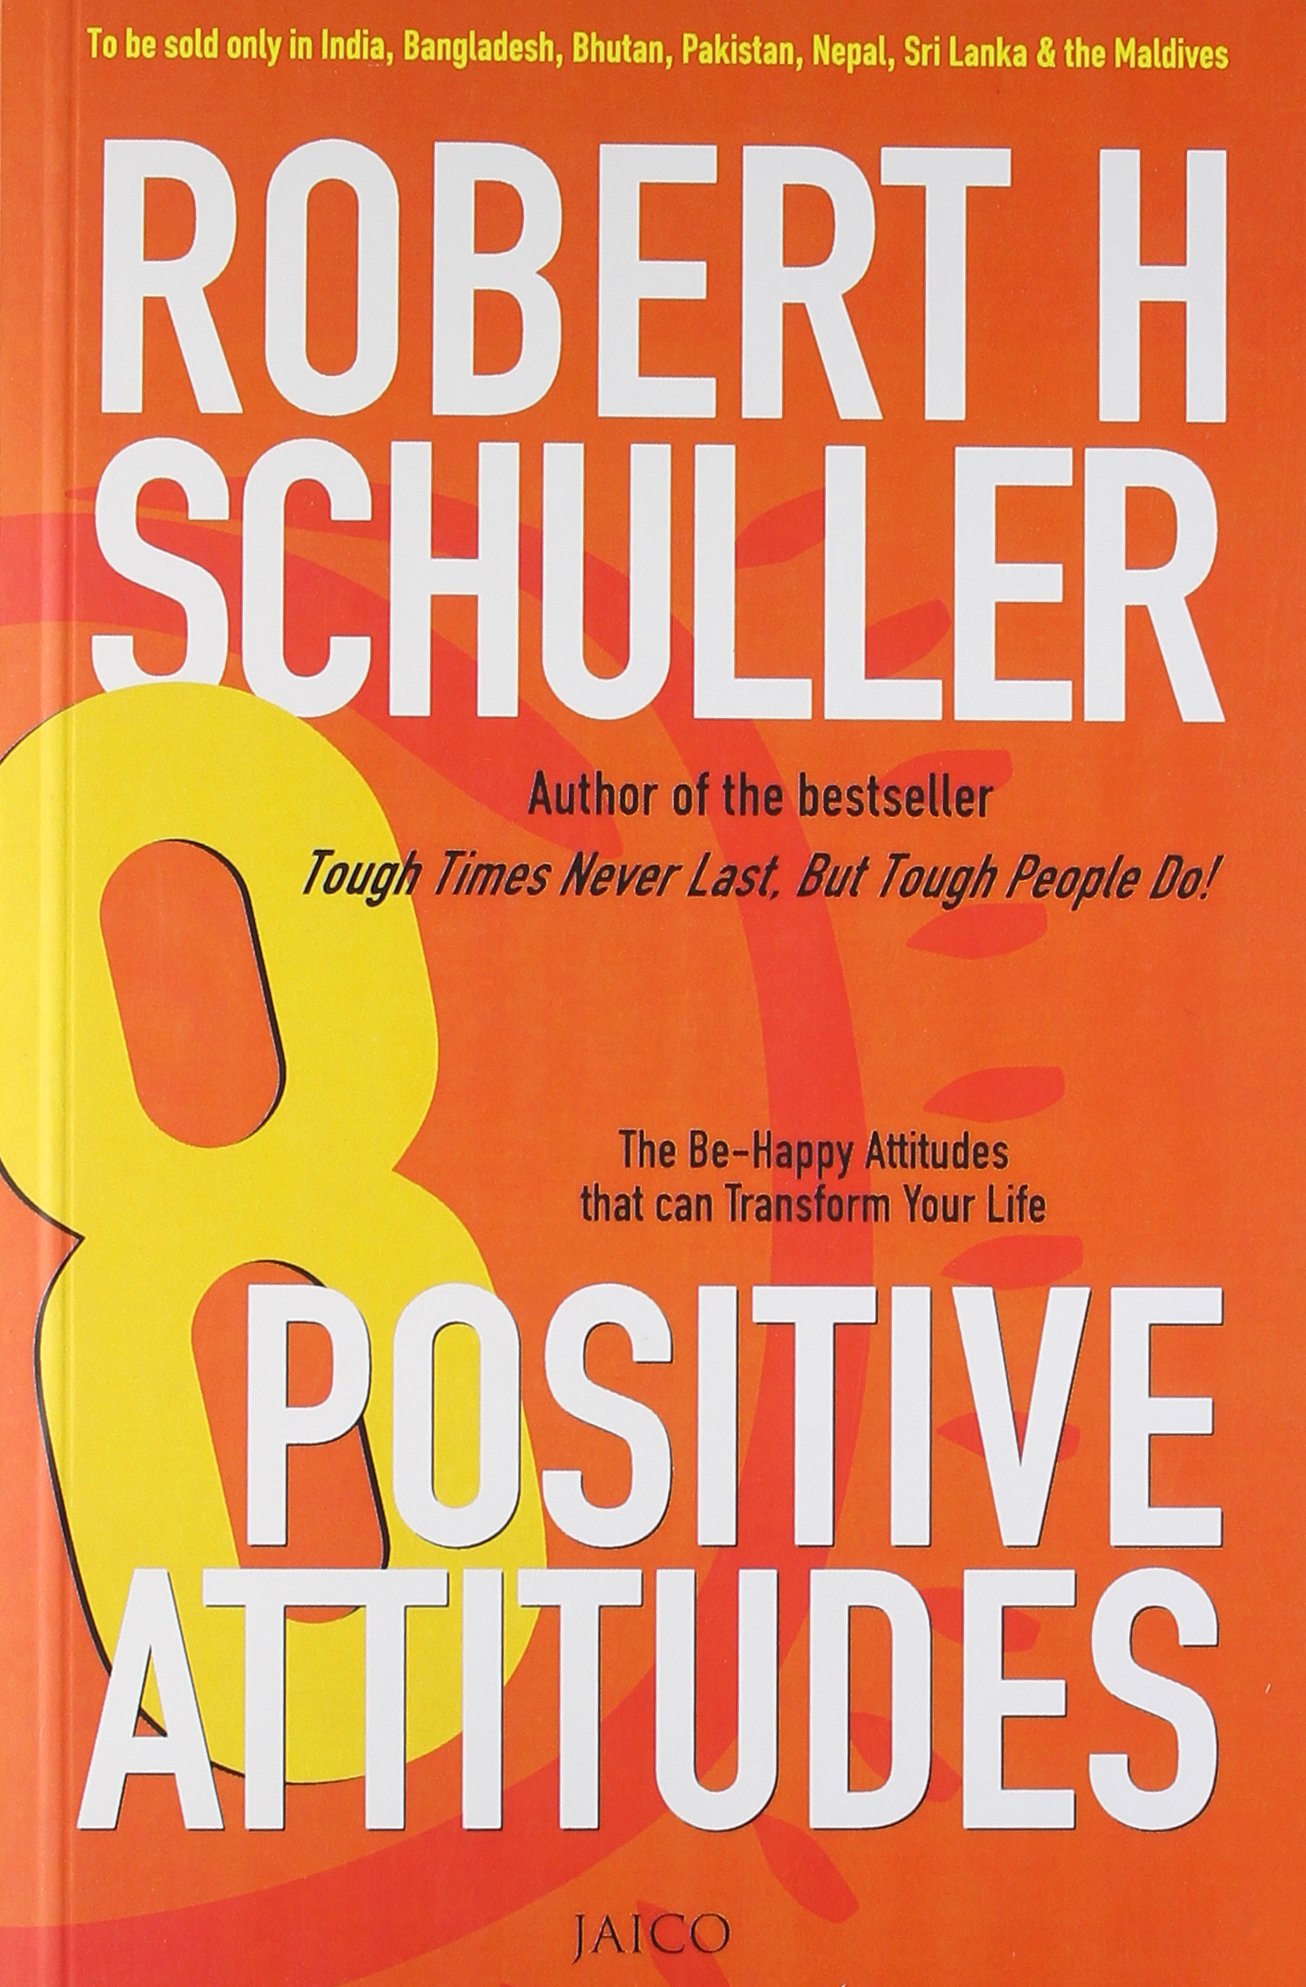 8 Positive Attitudes